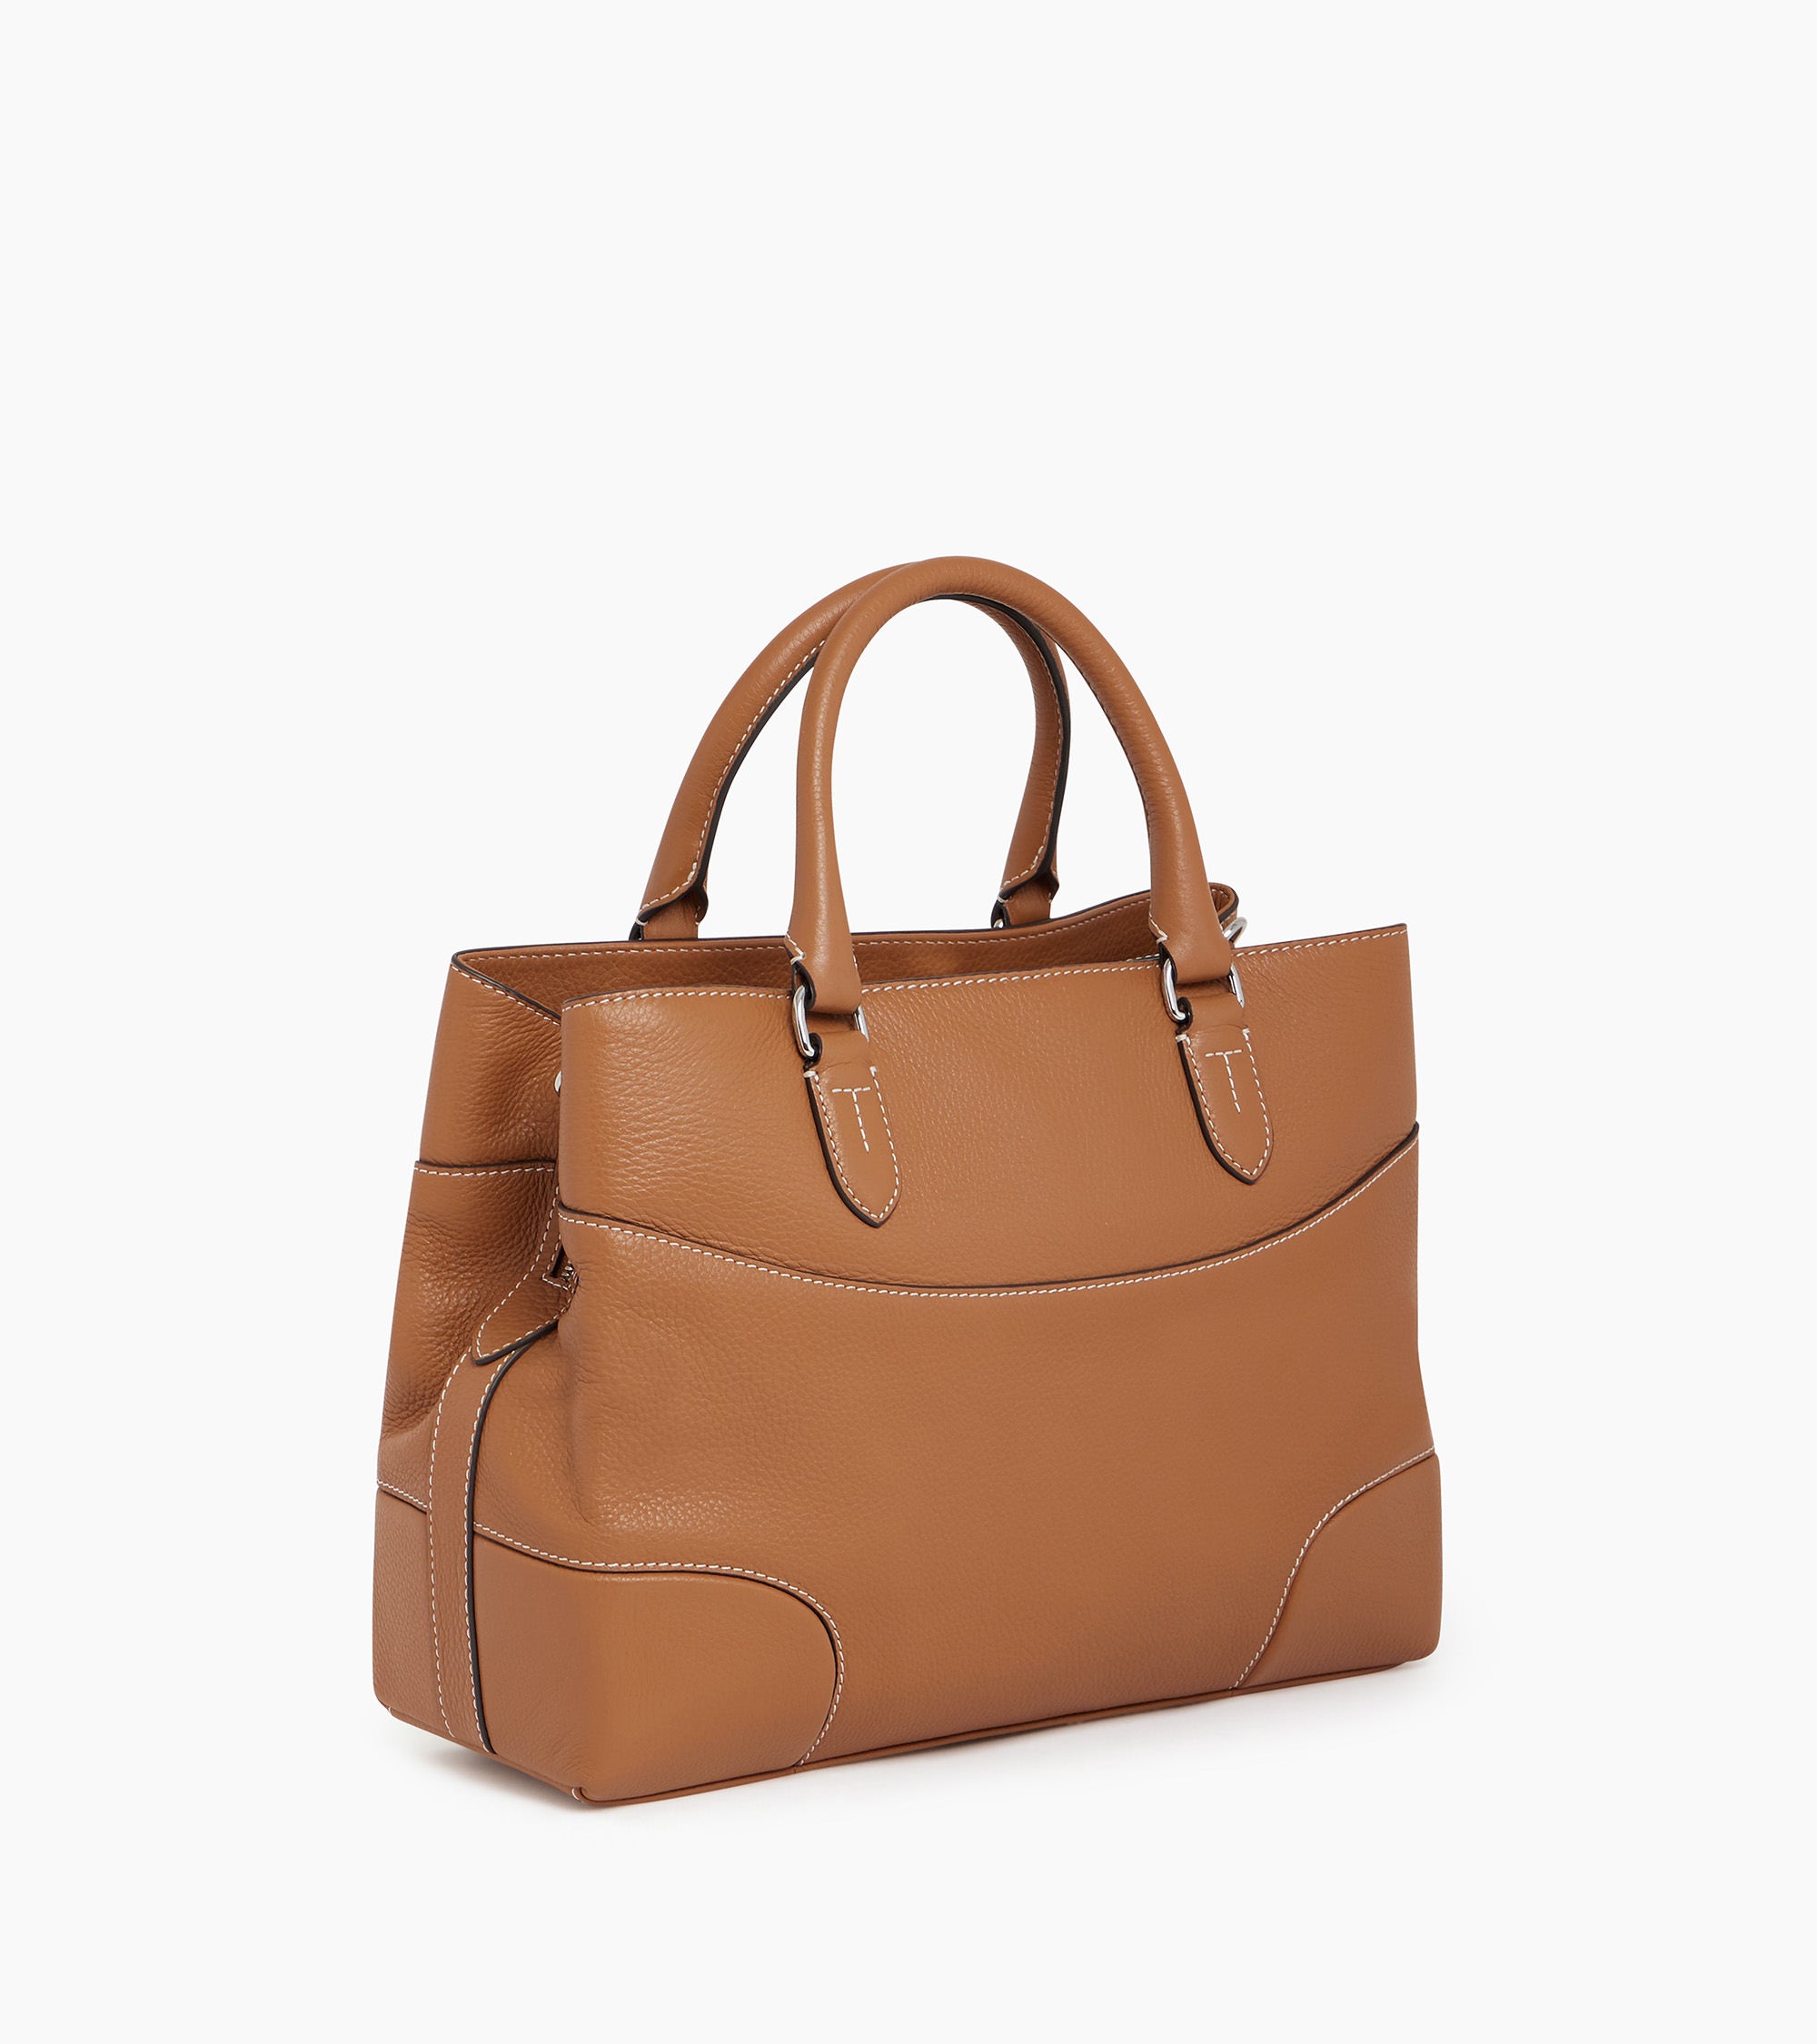 Romy large handbag in grained leather